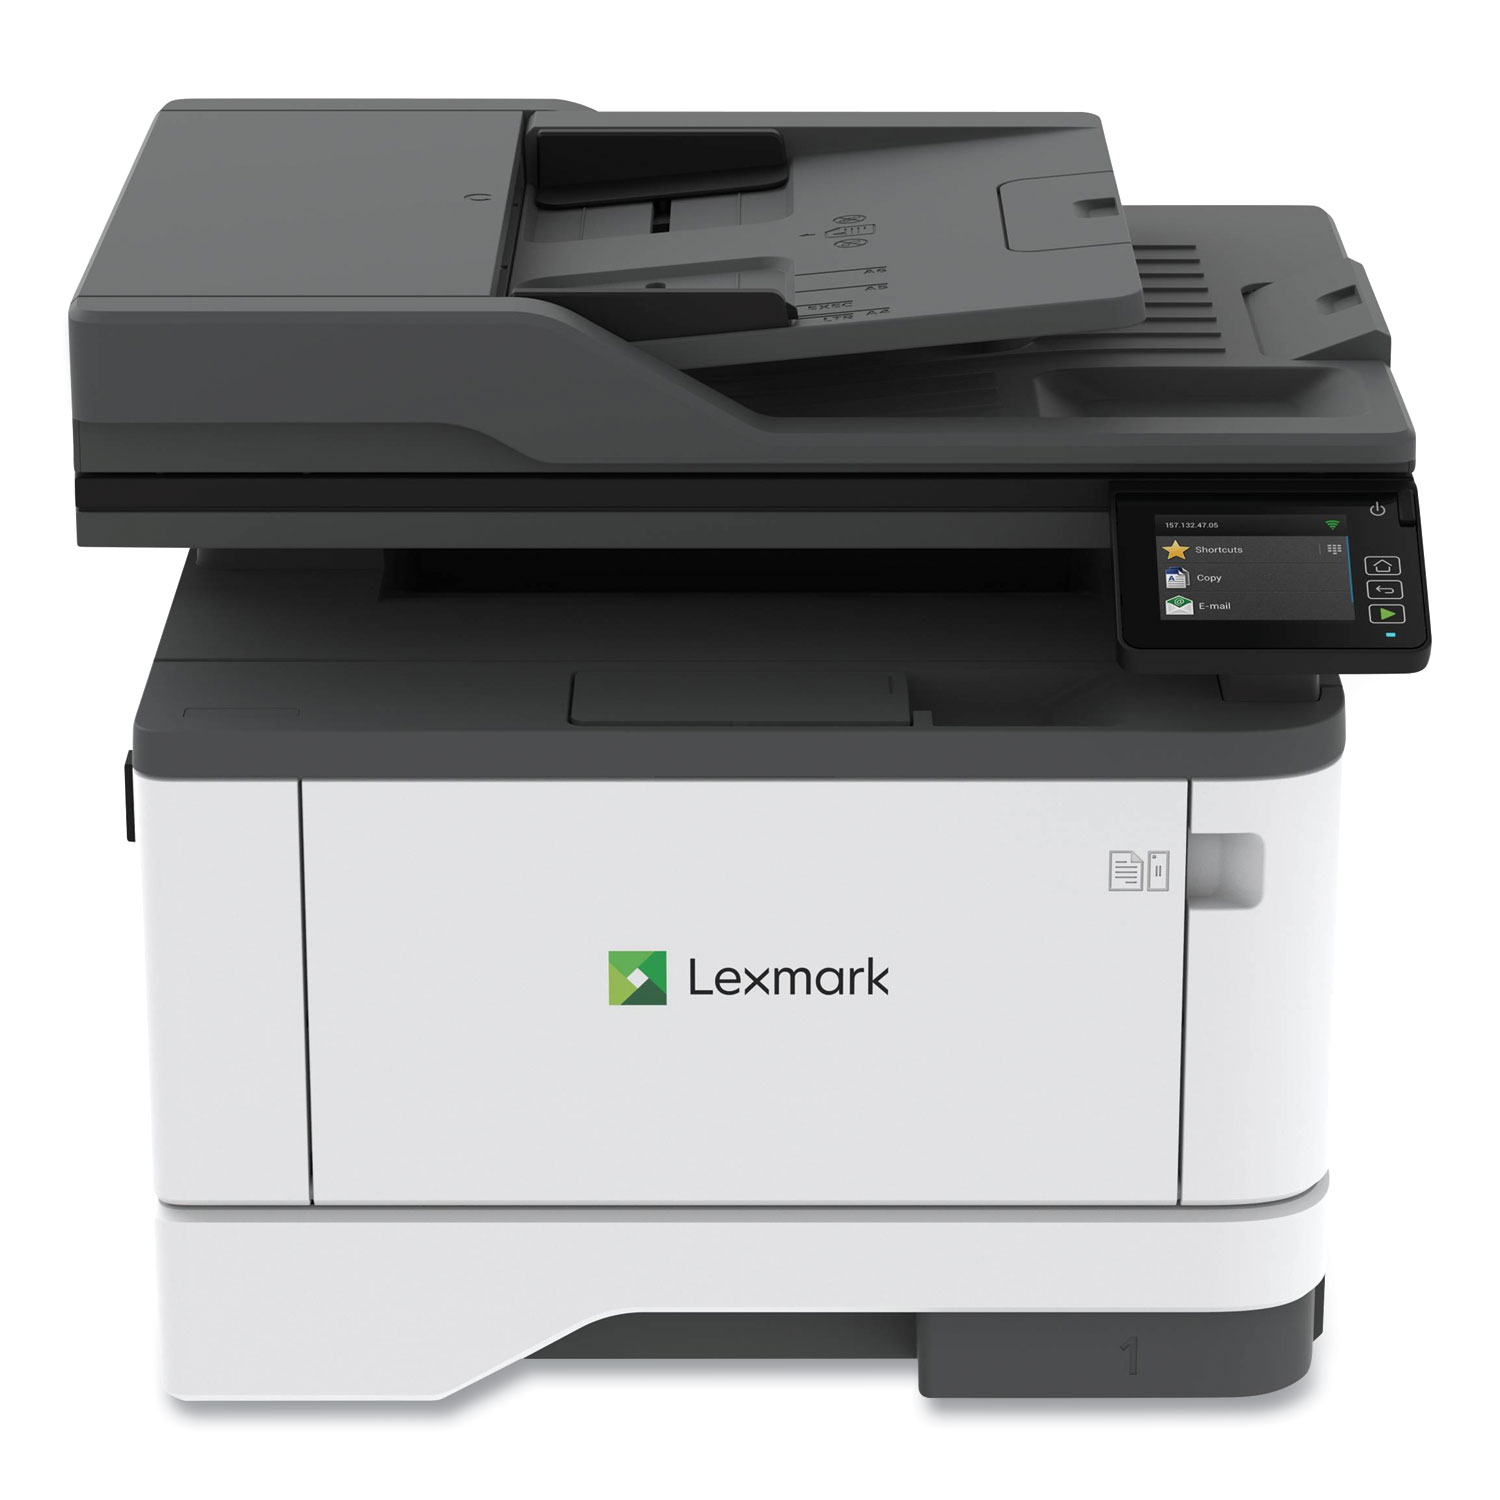 29S0500 MFP Mono Laser Printer, Copy